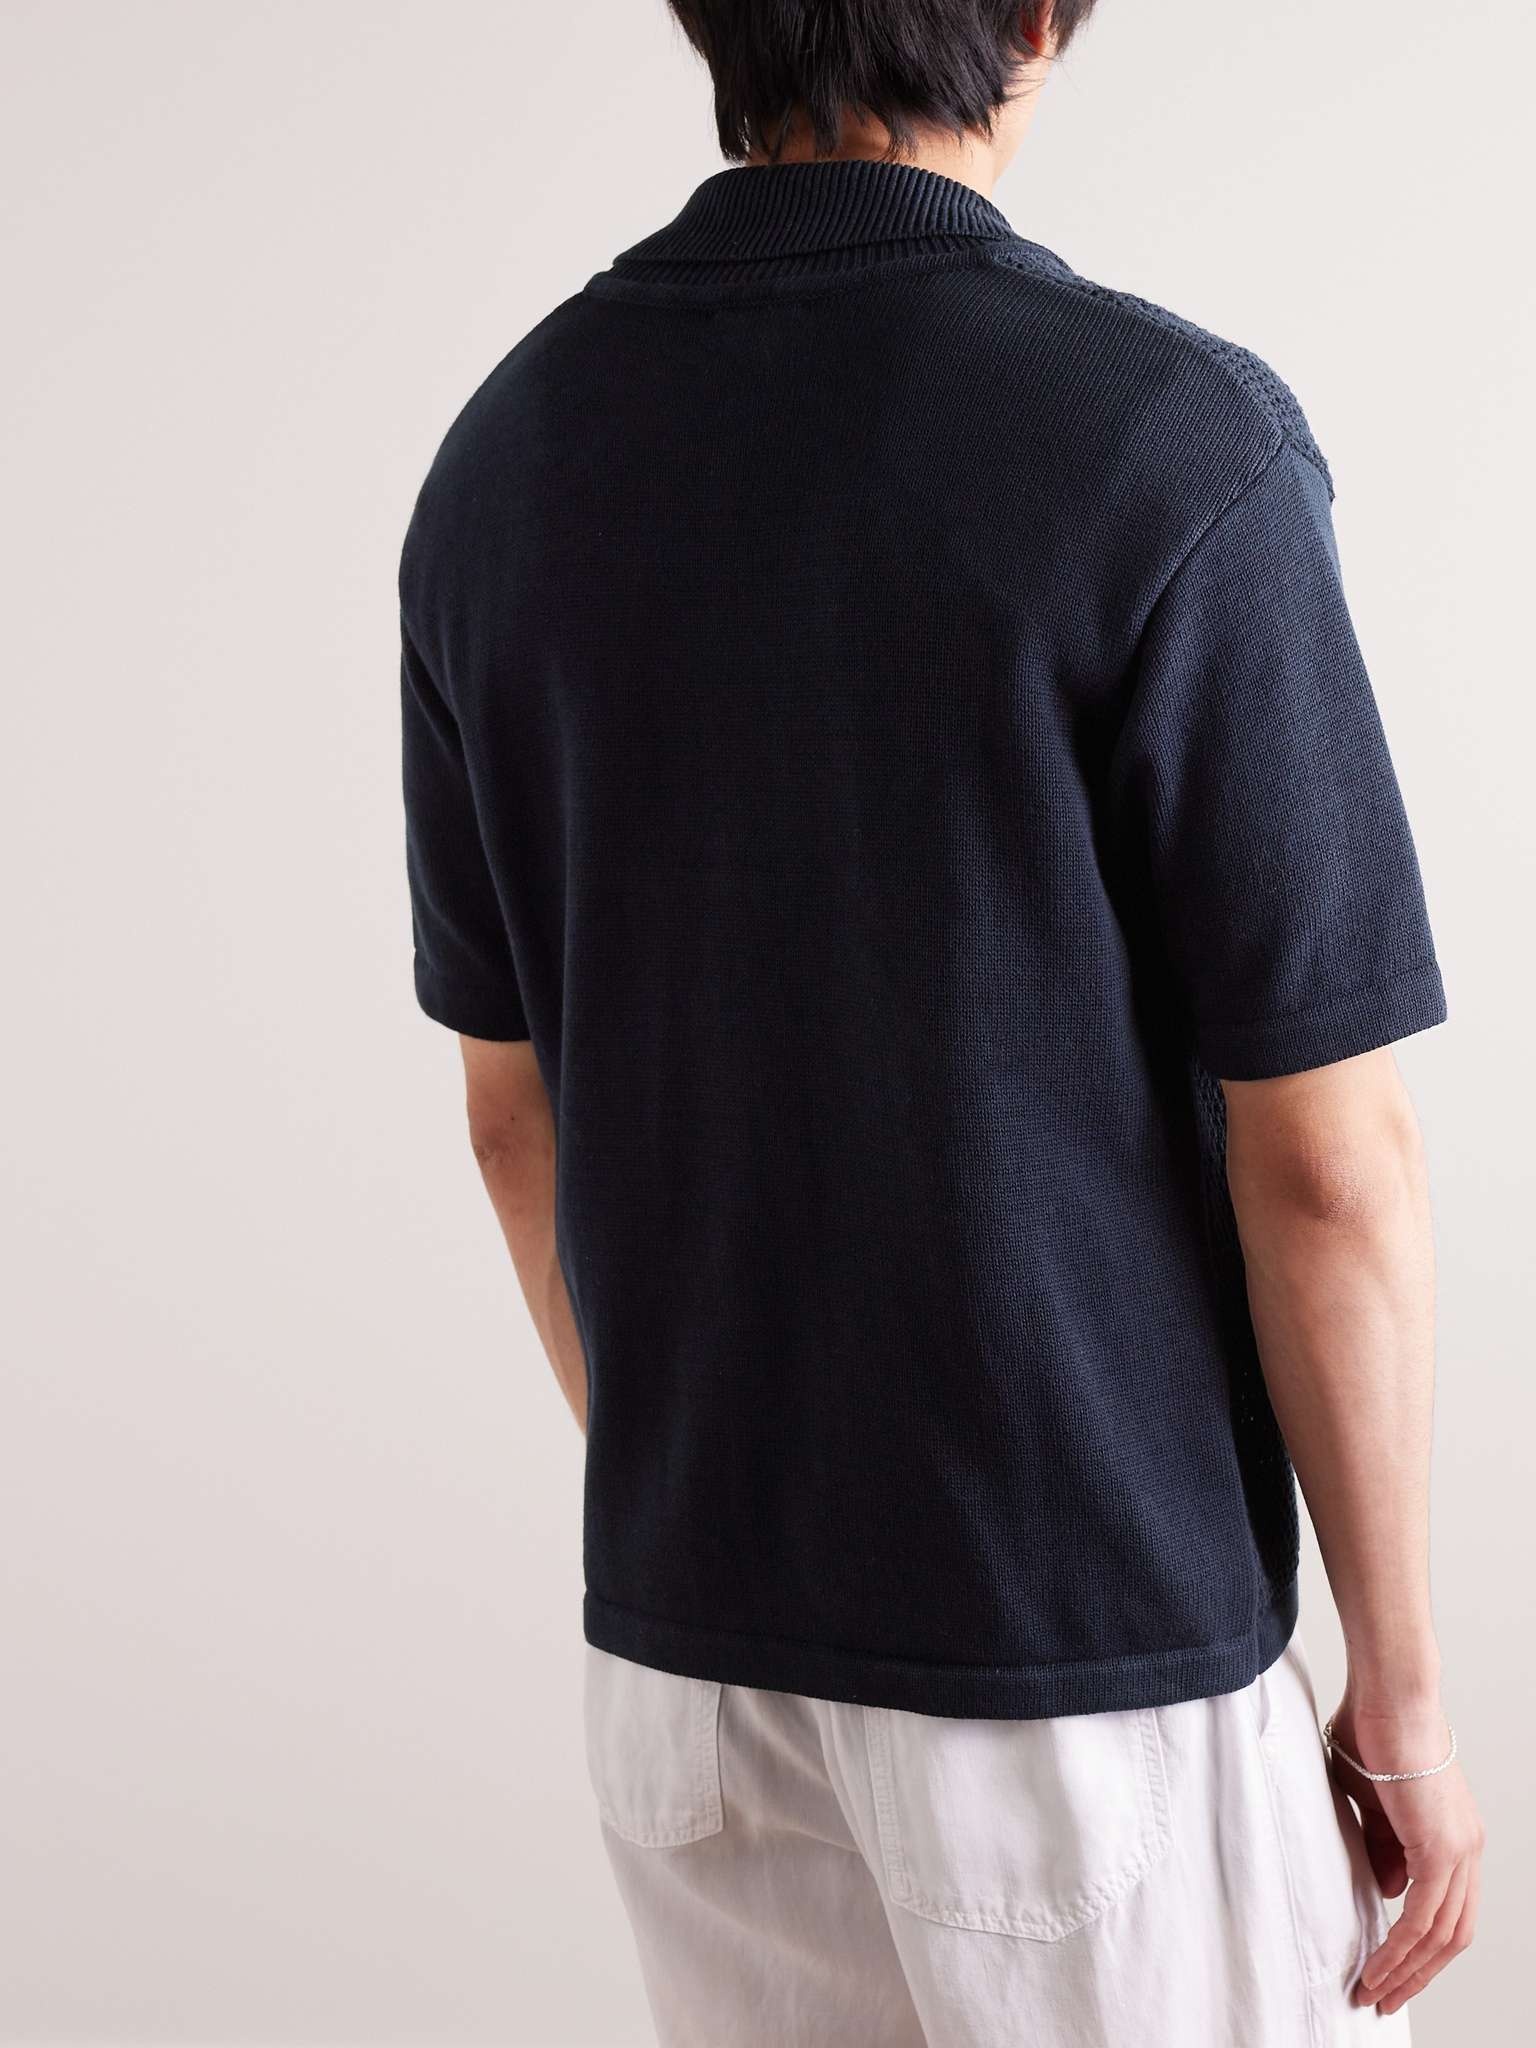 Mawes Open-Knit Organic Cotton Shirt - 3